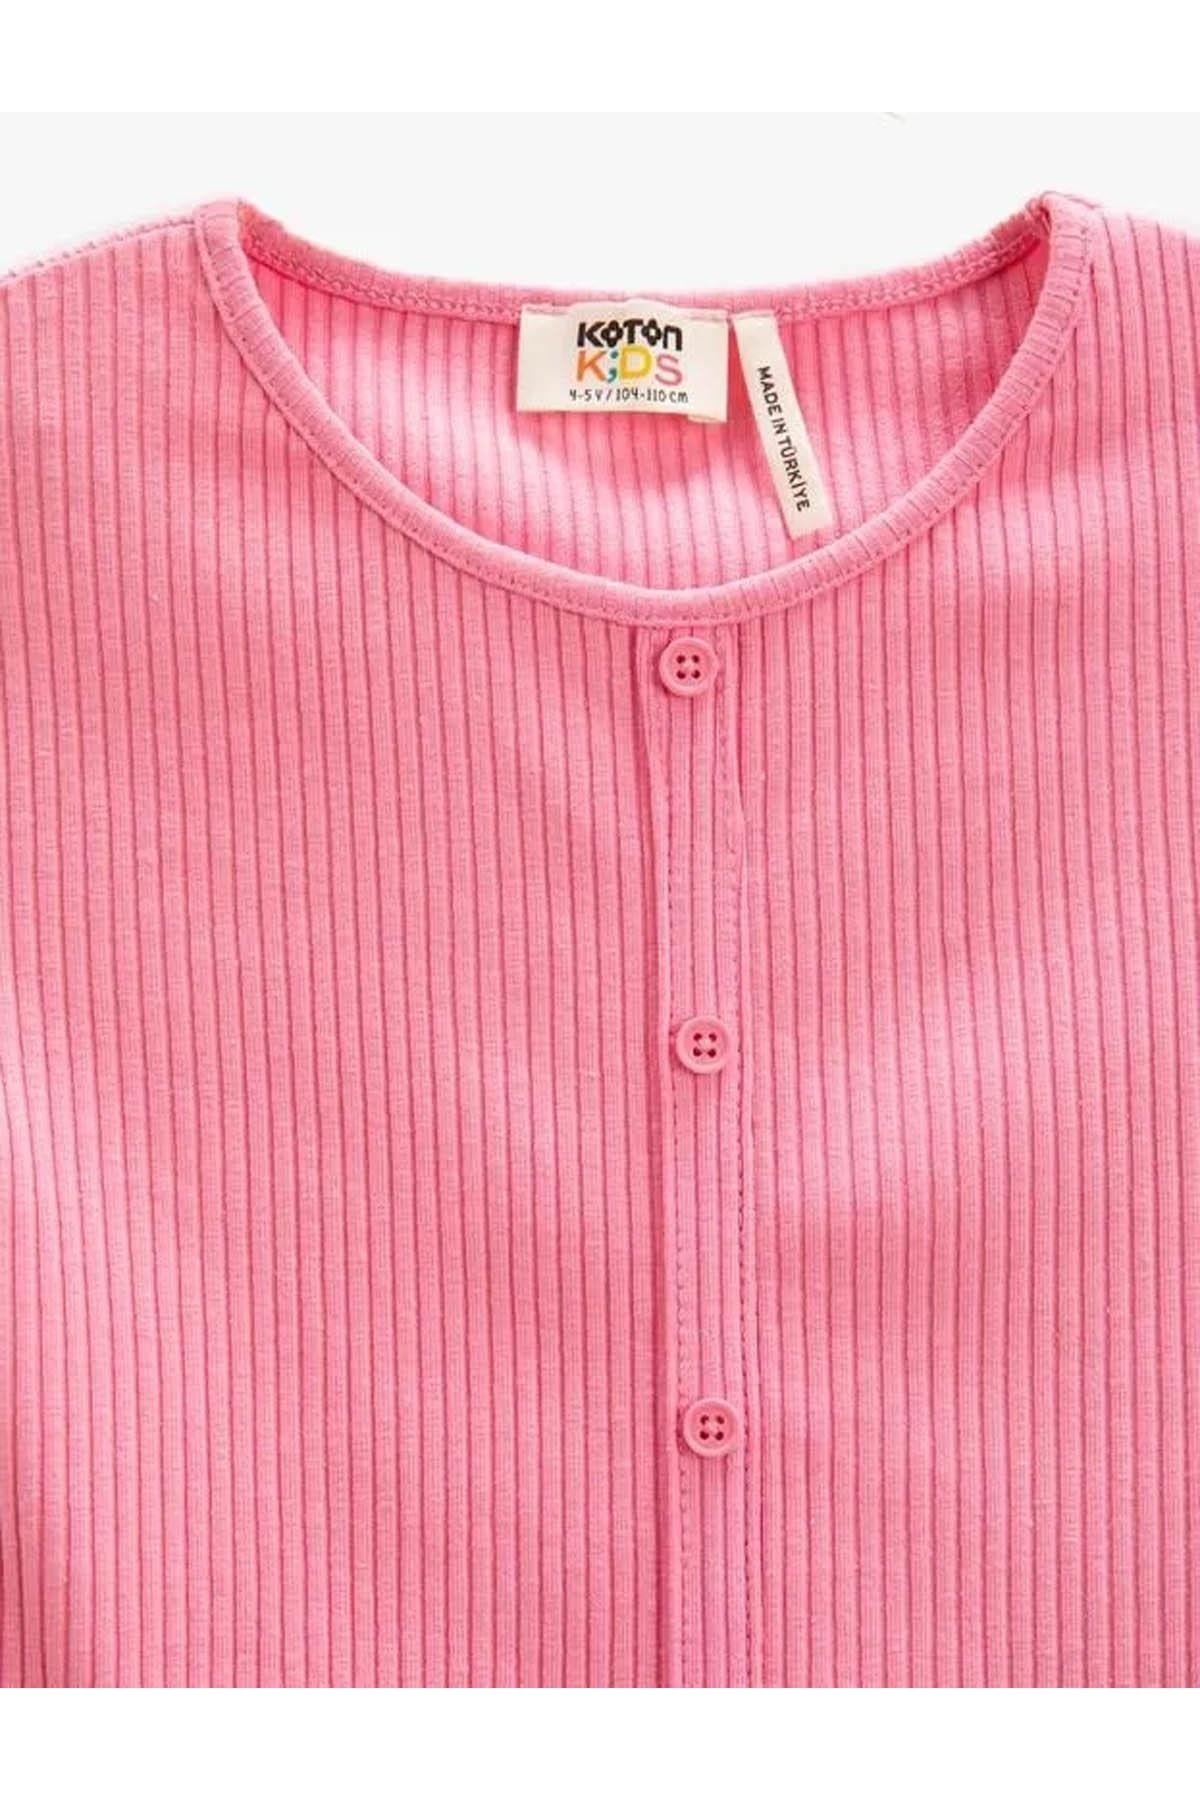 Levně Koton Girls' T-shirt Pink 3skg10026ak